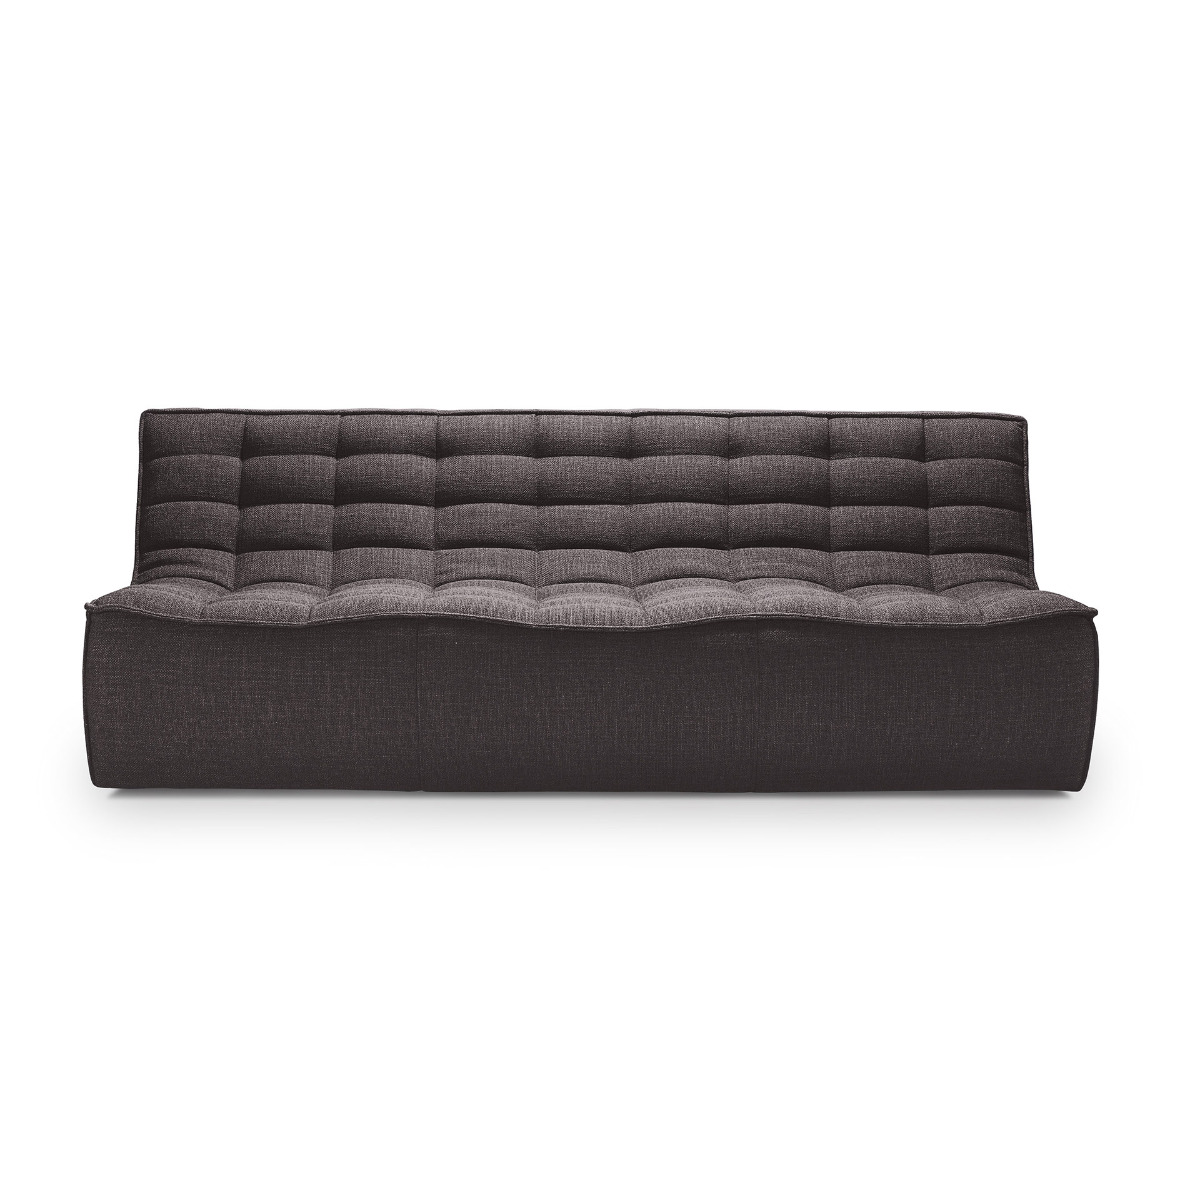 N701 Sofa in Dark Grey